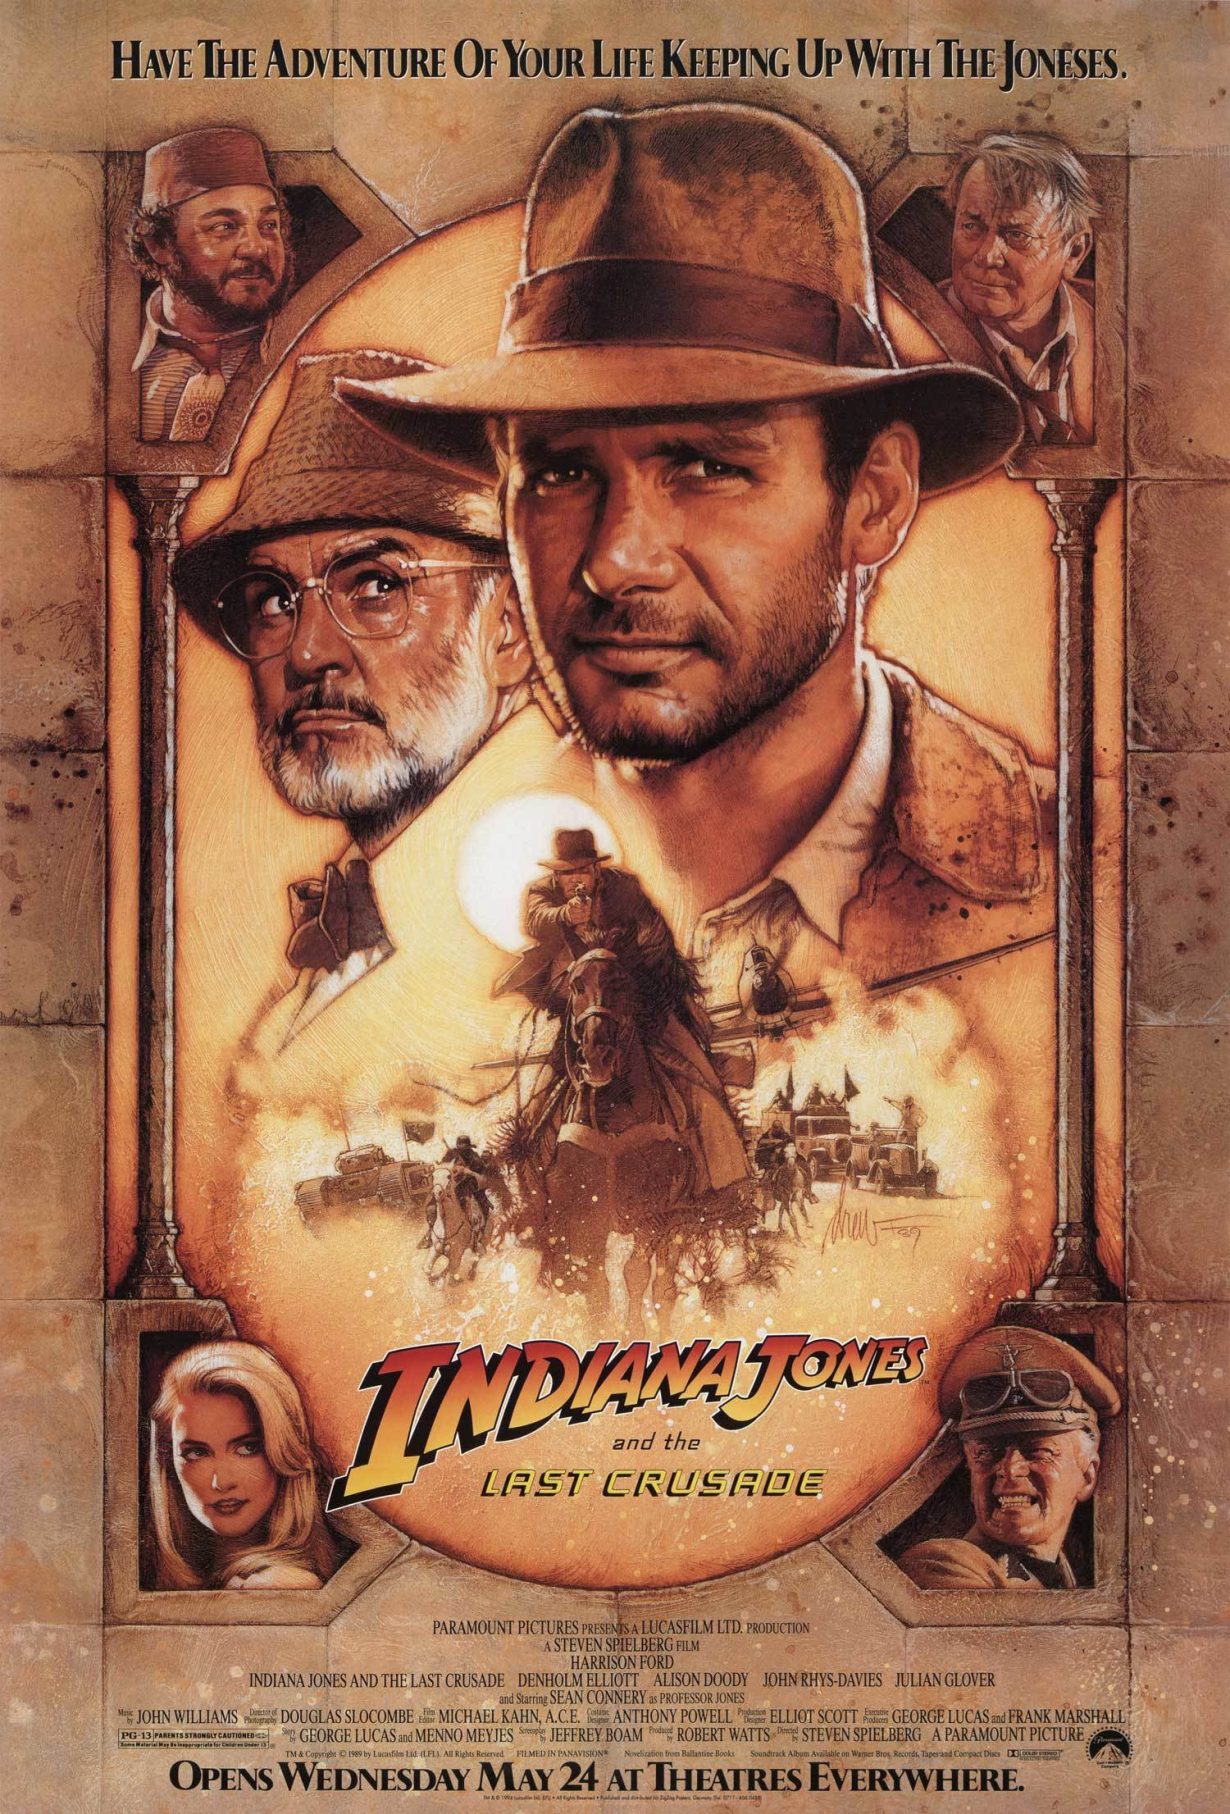 Enjoy the original Indiana Jones movie trilogy at Switchyard Park